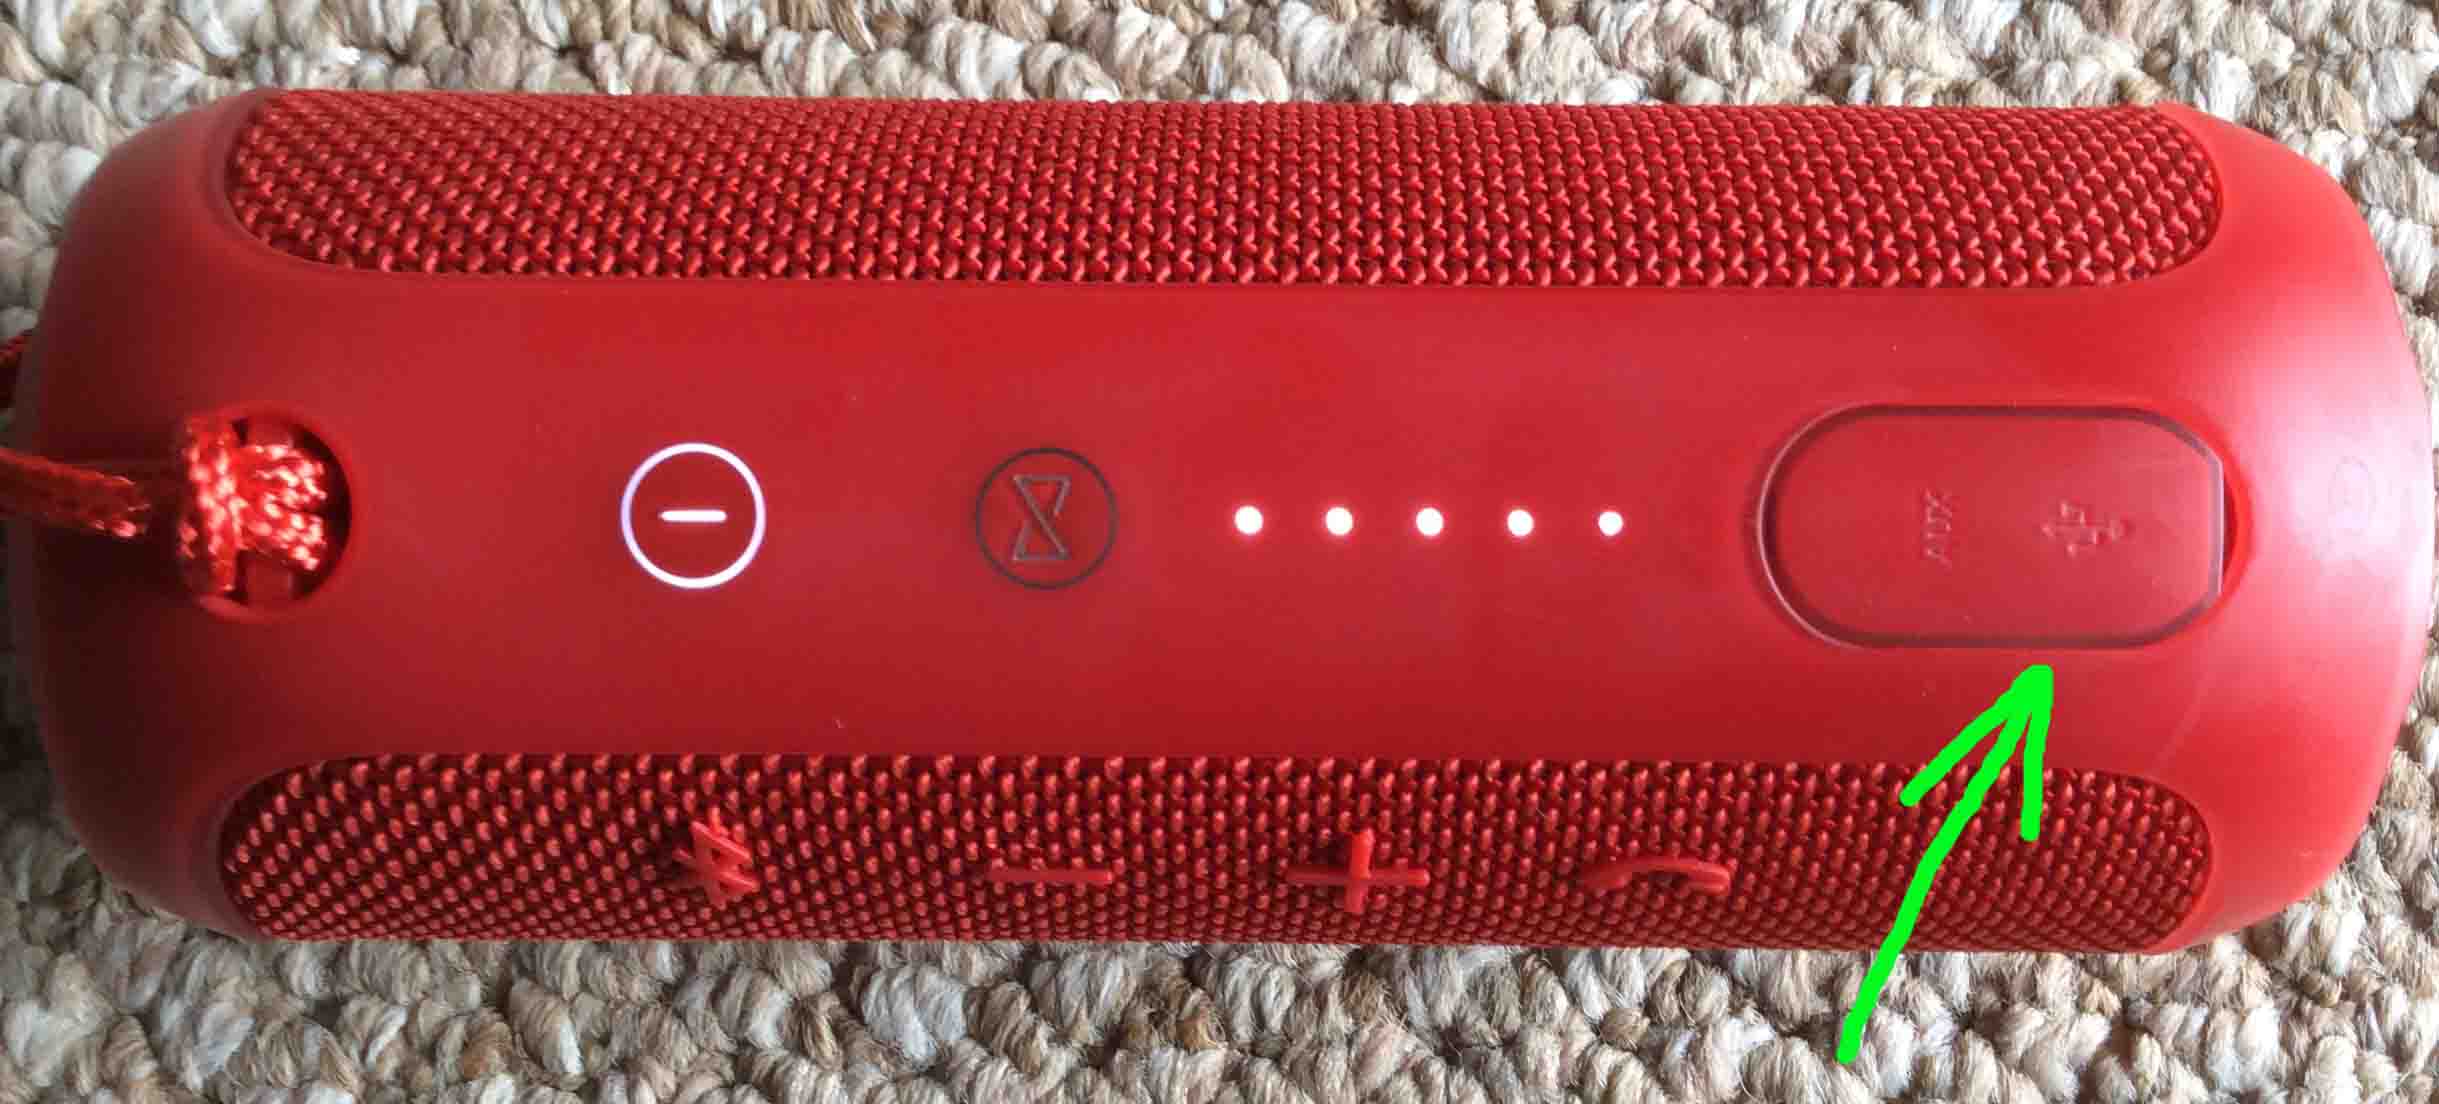 Weggelaten Hectare Rijk How to Charge JBL Flip 3 Bluetooth Speaker - Tom's Tek Stop